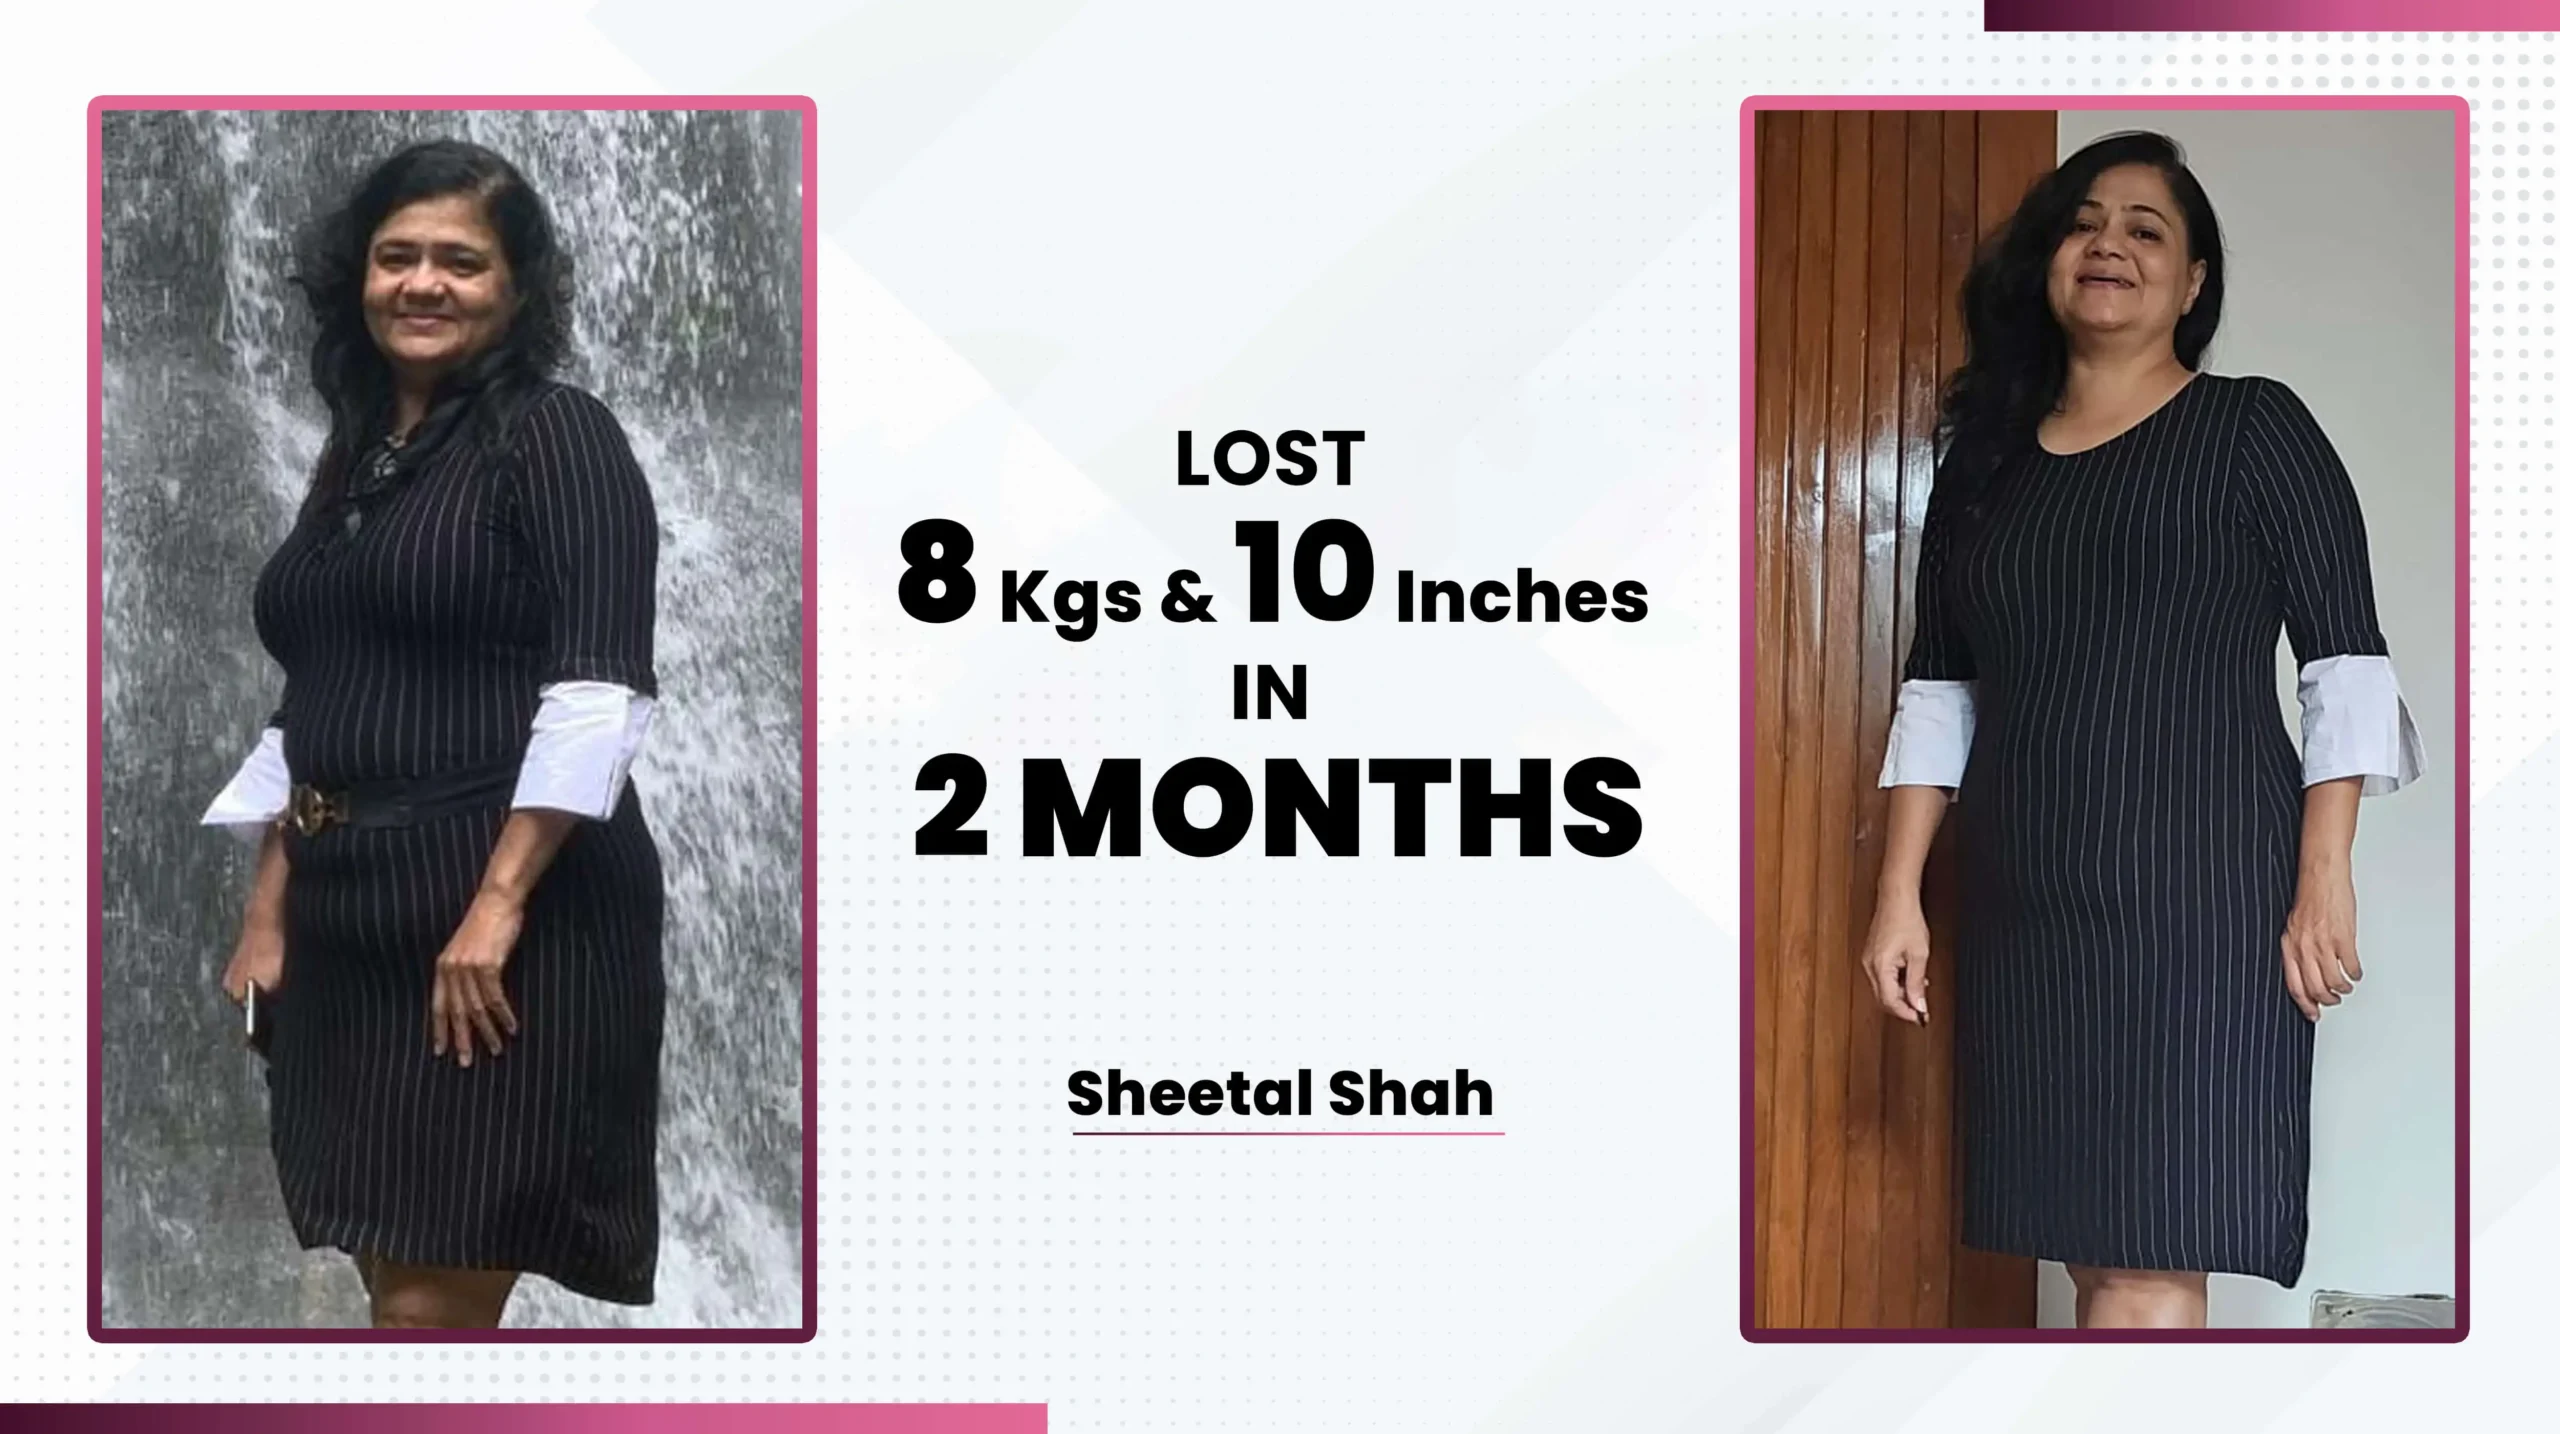 11Sheetal Shah 8 Kgs Weight Loss Transformation in 3 Months